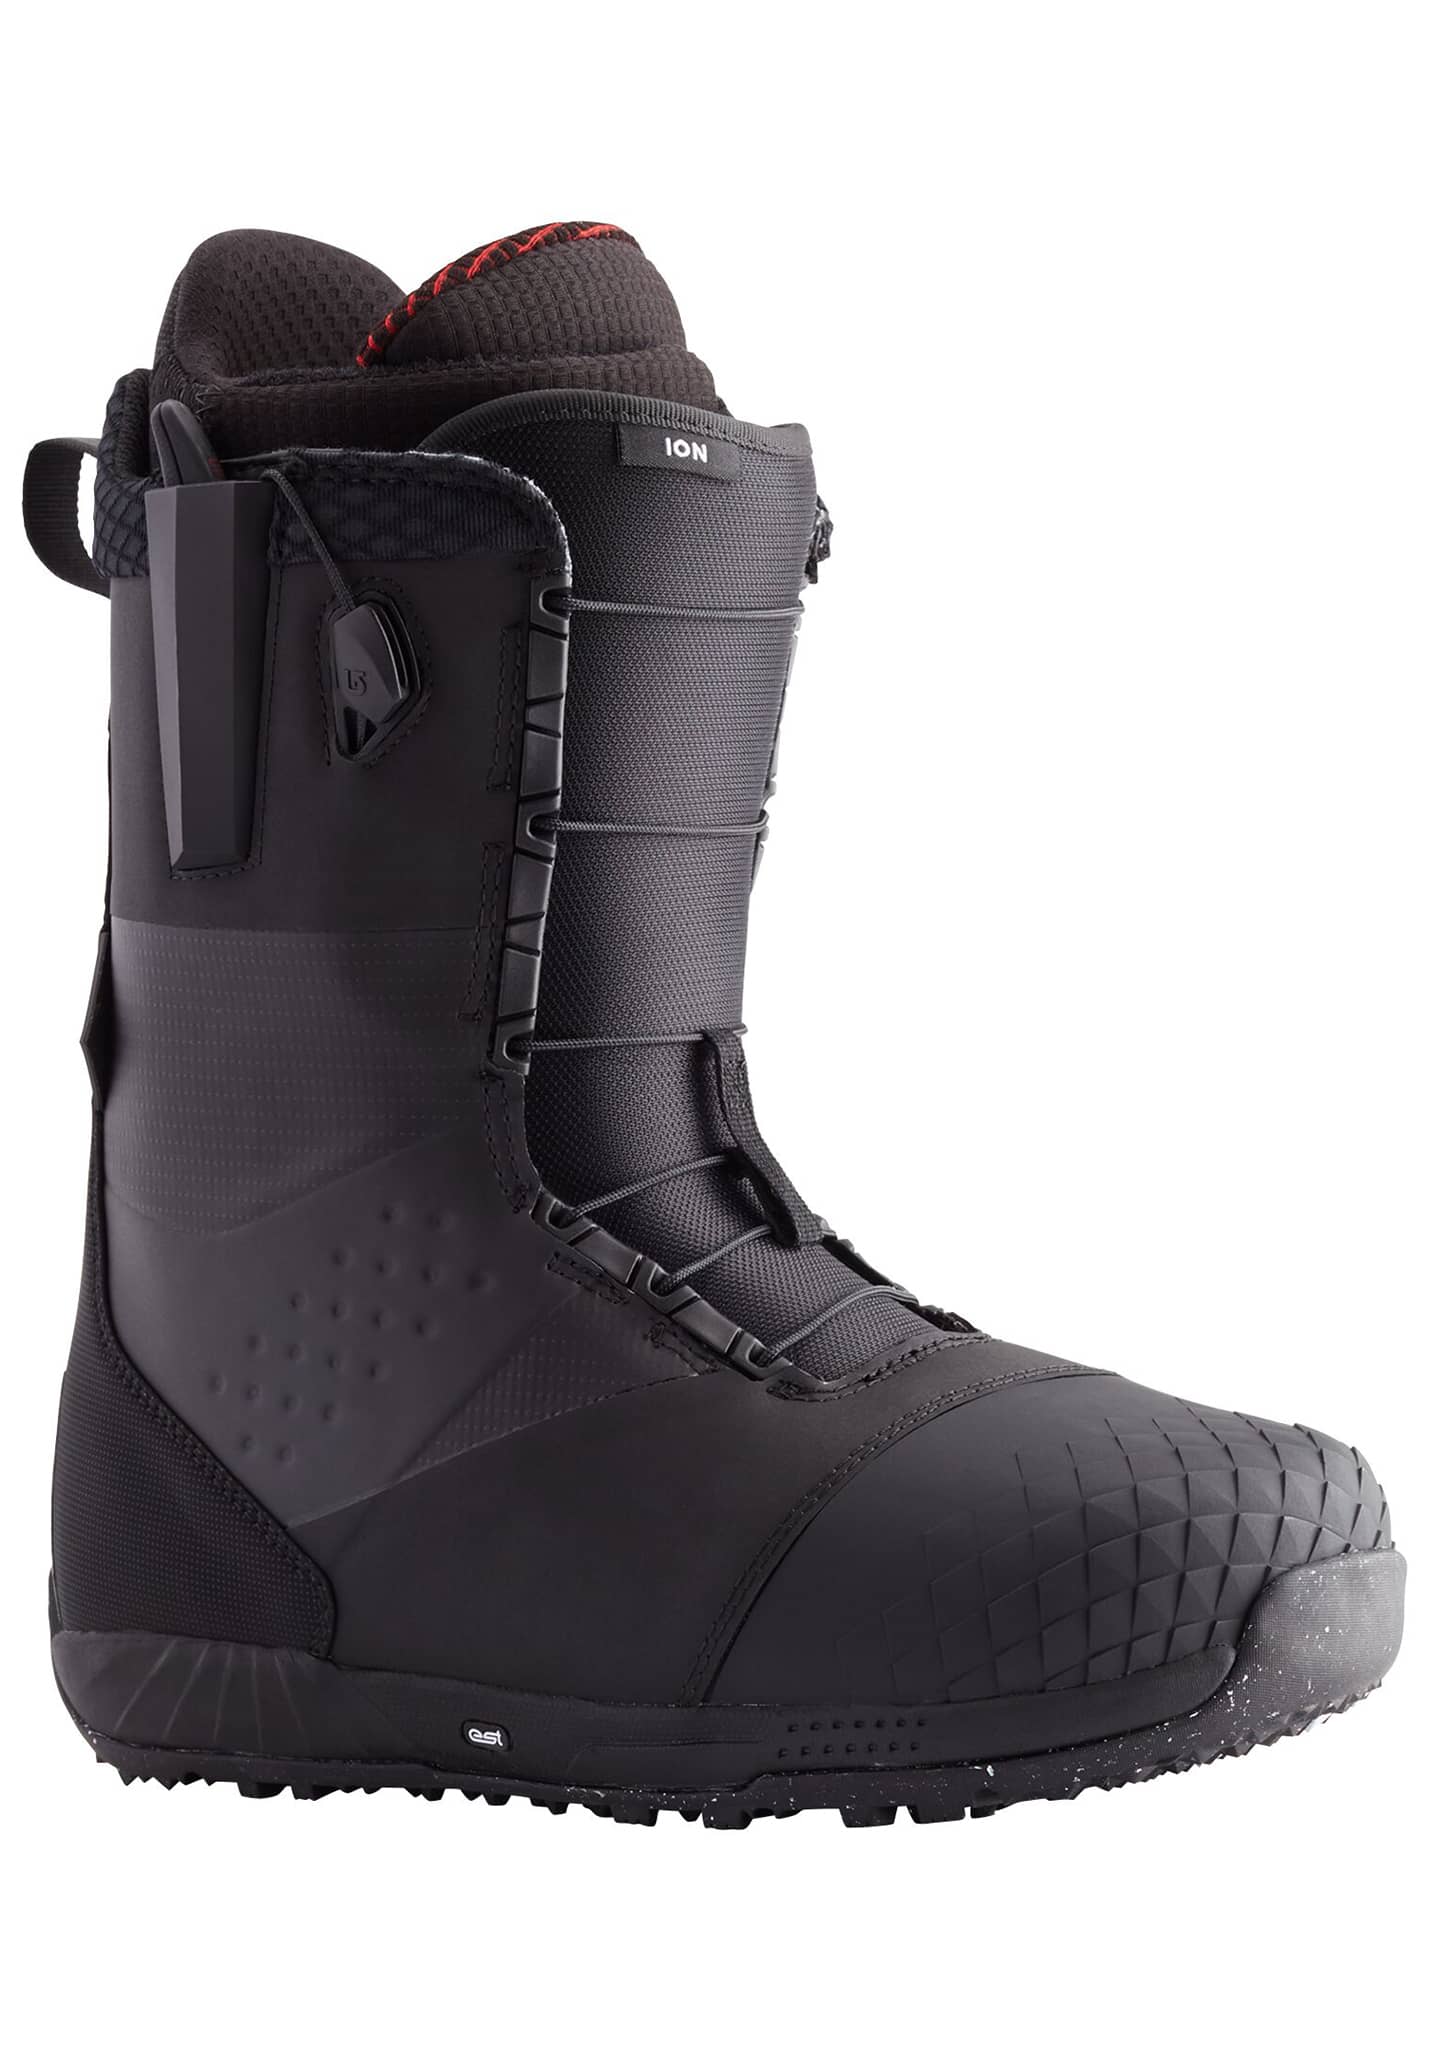 Burton Ion Snowboard Boots black 45